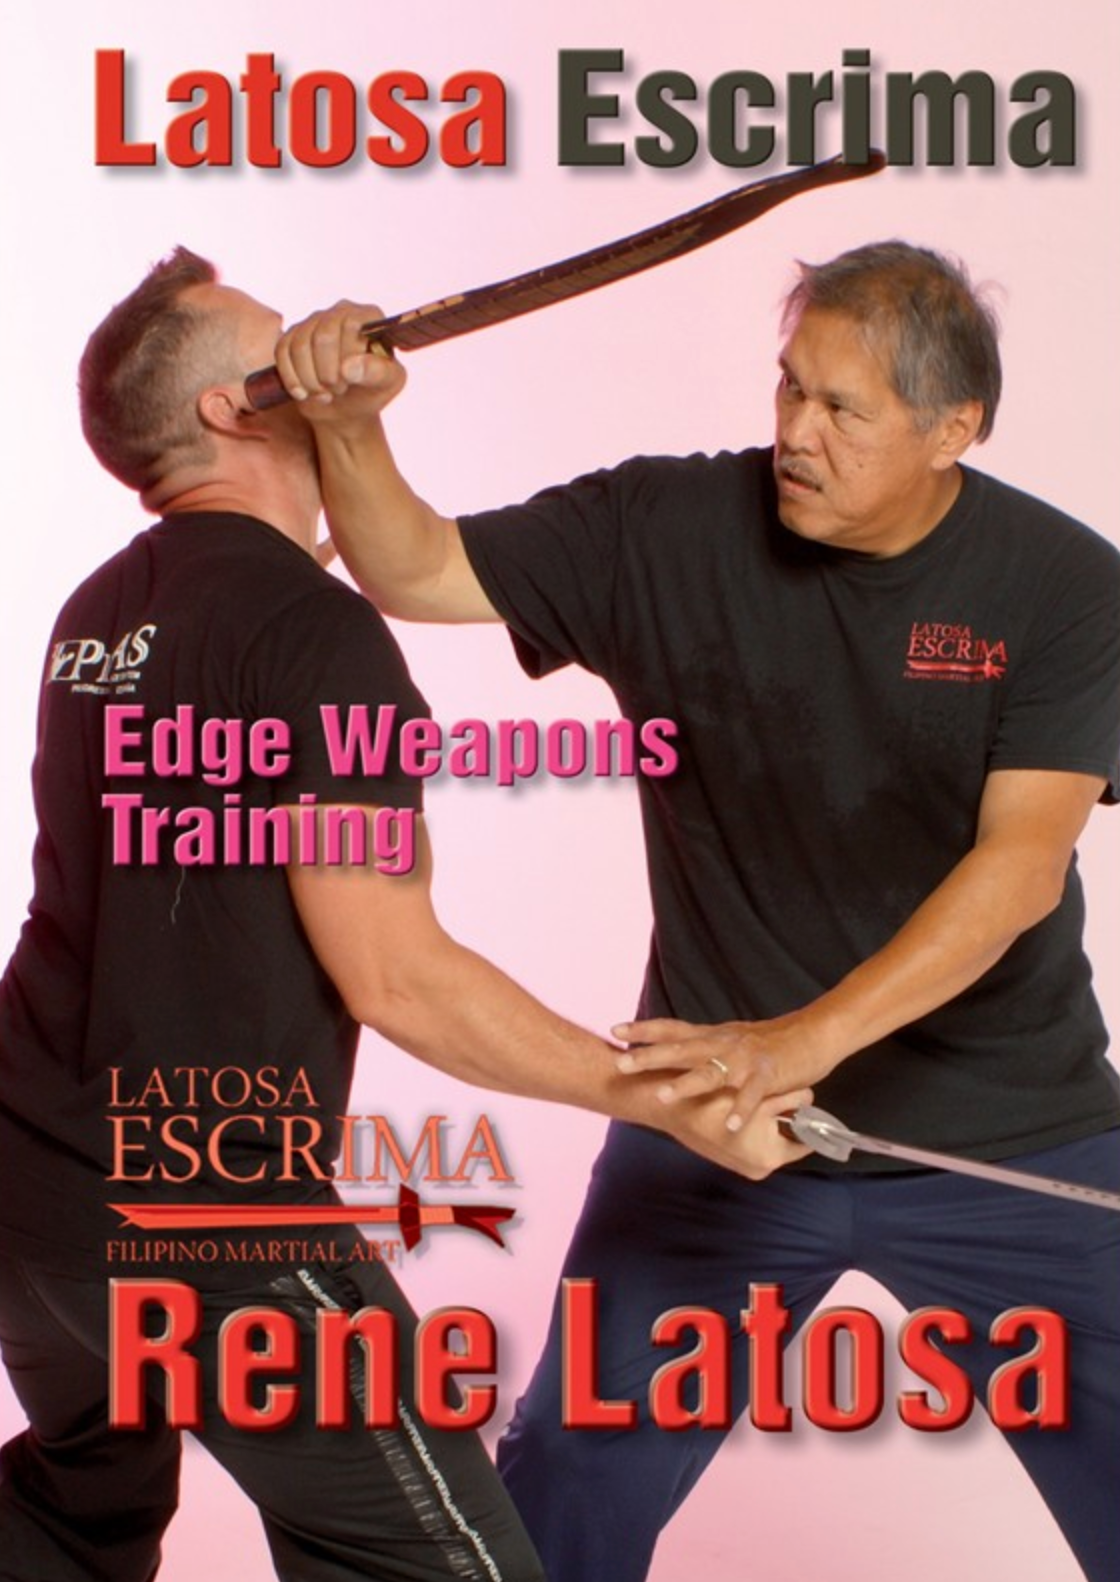 Latosa Escrima Edged Weapons Training DVD by Rene Latosa - Budovideos Inc